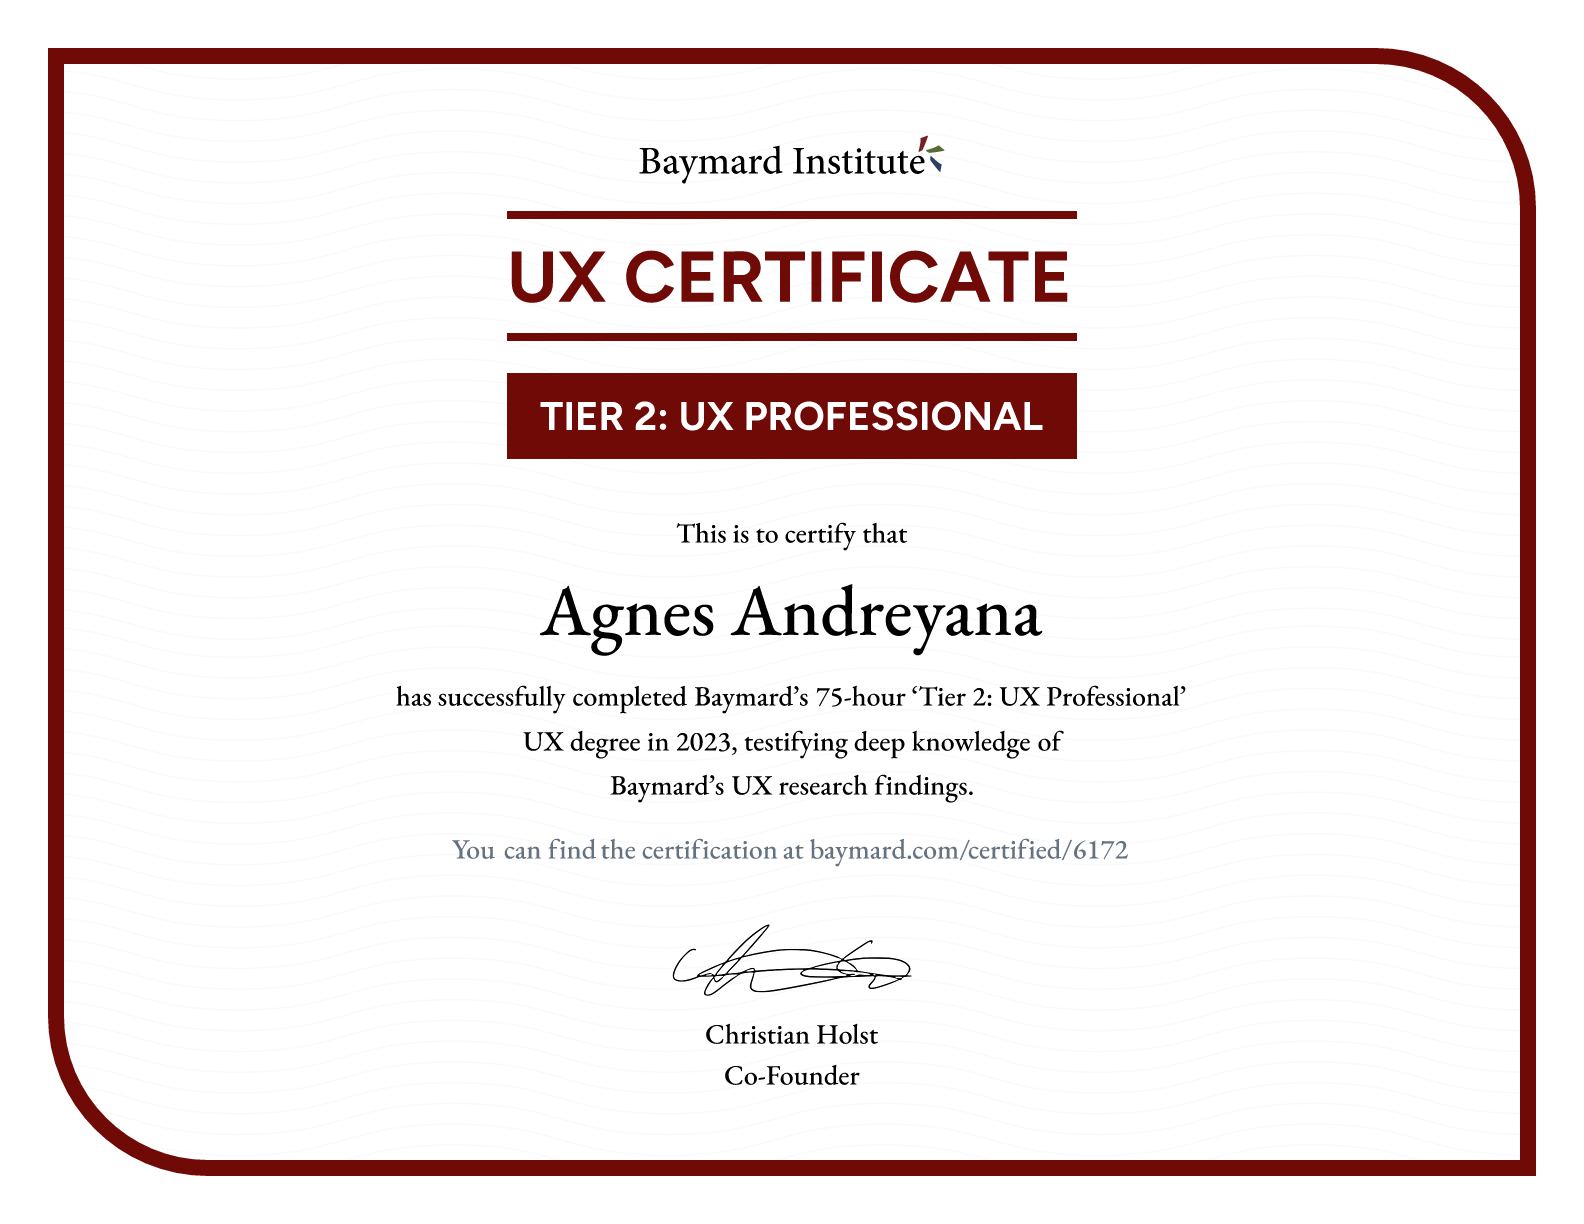 Agnes Andreyana’s certificate